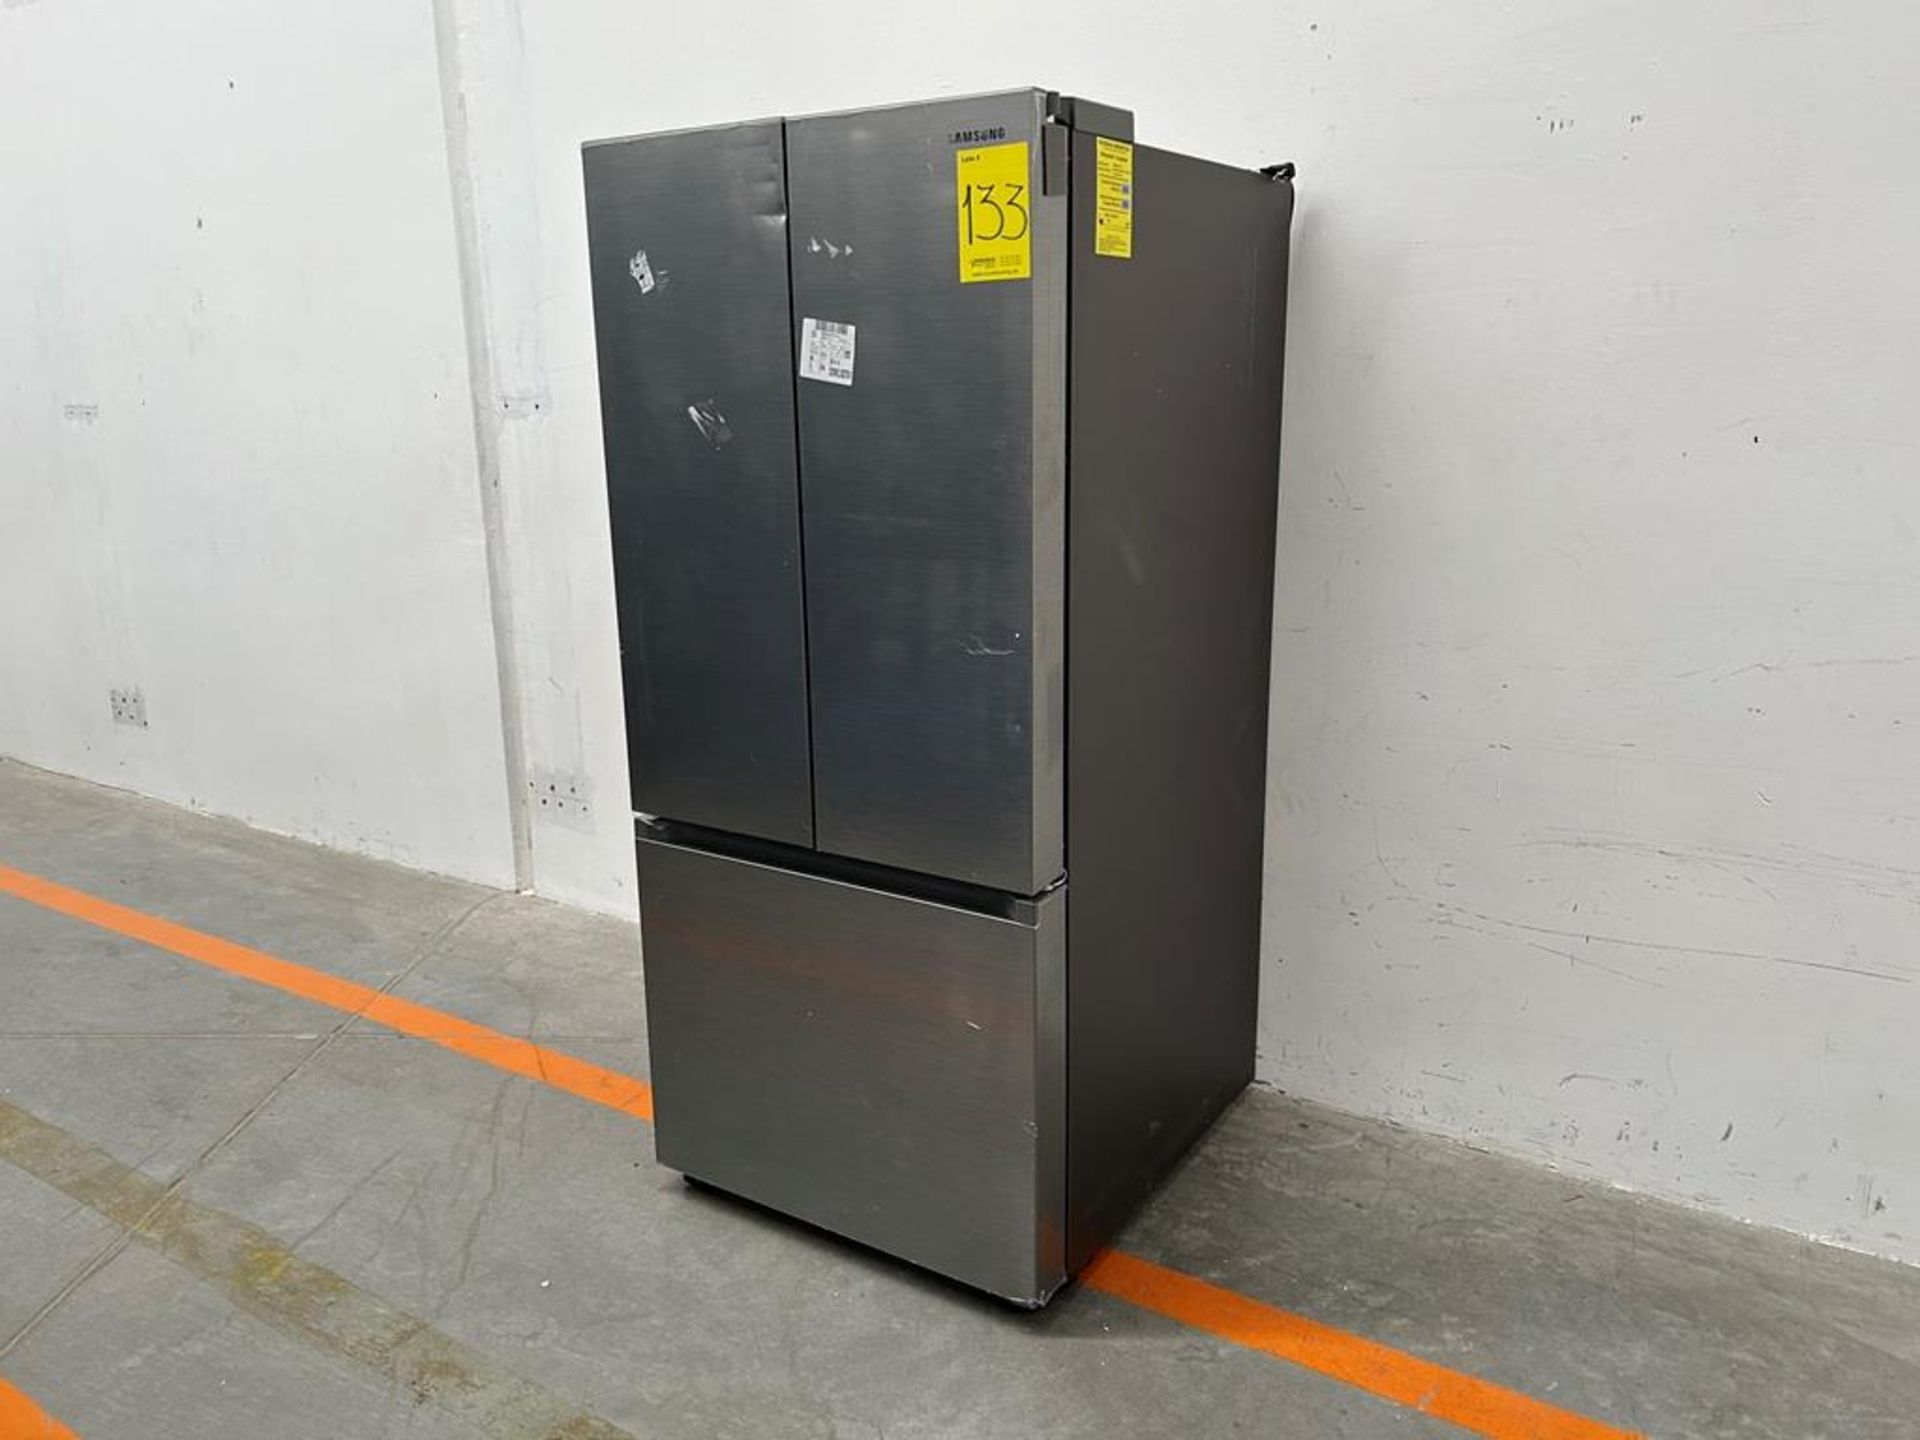 (NUEVO) Refrigerador Marca SAMSUNG, Modelo RF22A4010S9, Serie 400509W, Color GRIS (golpe ligero fro - Image 3 of 12